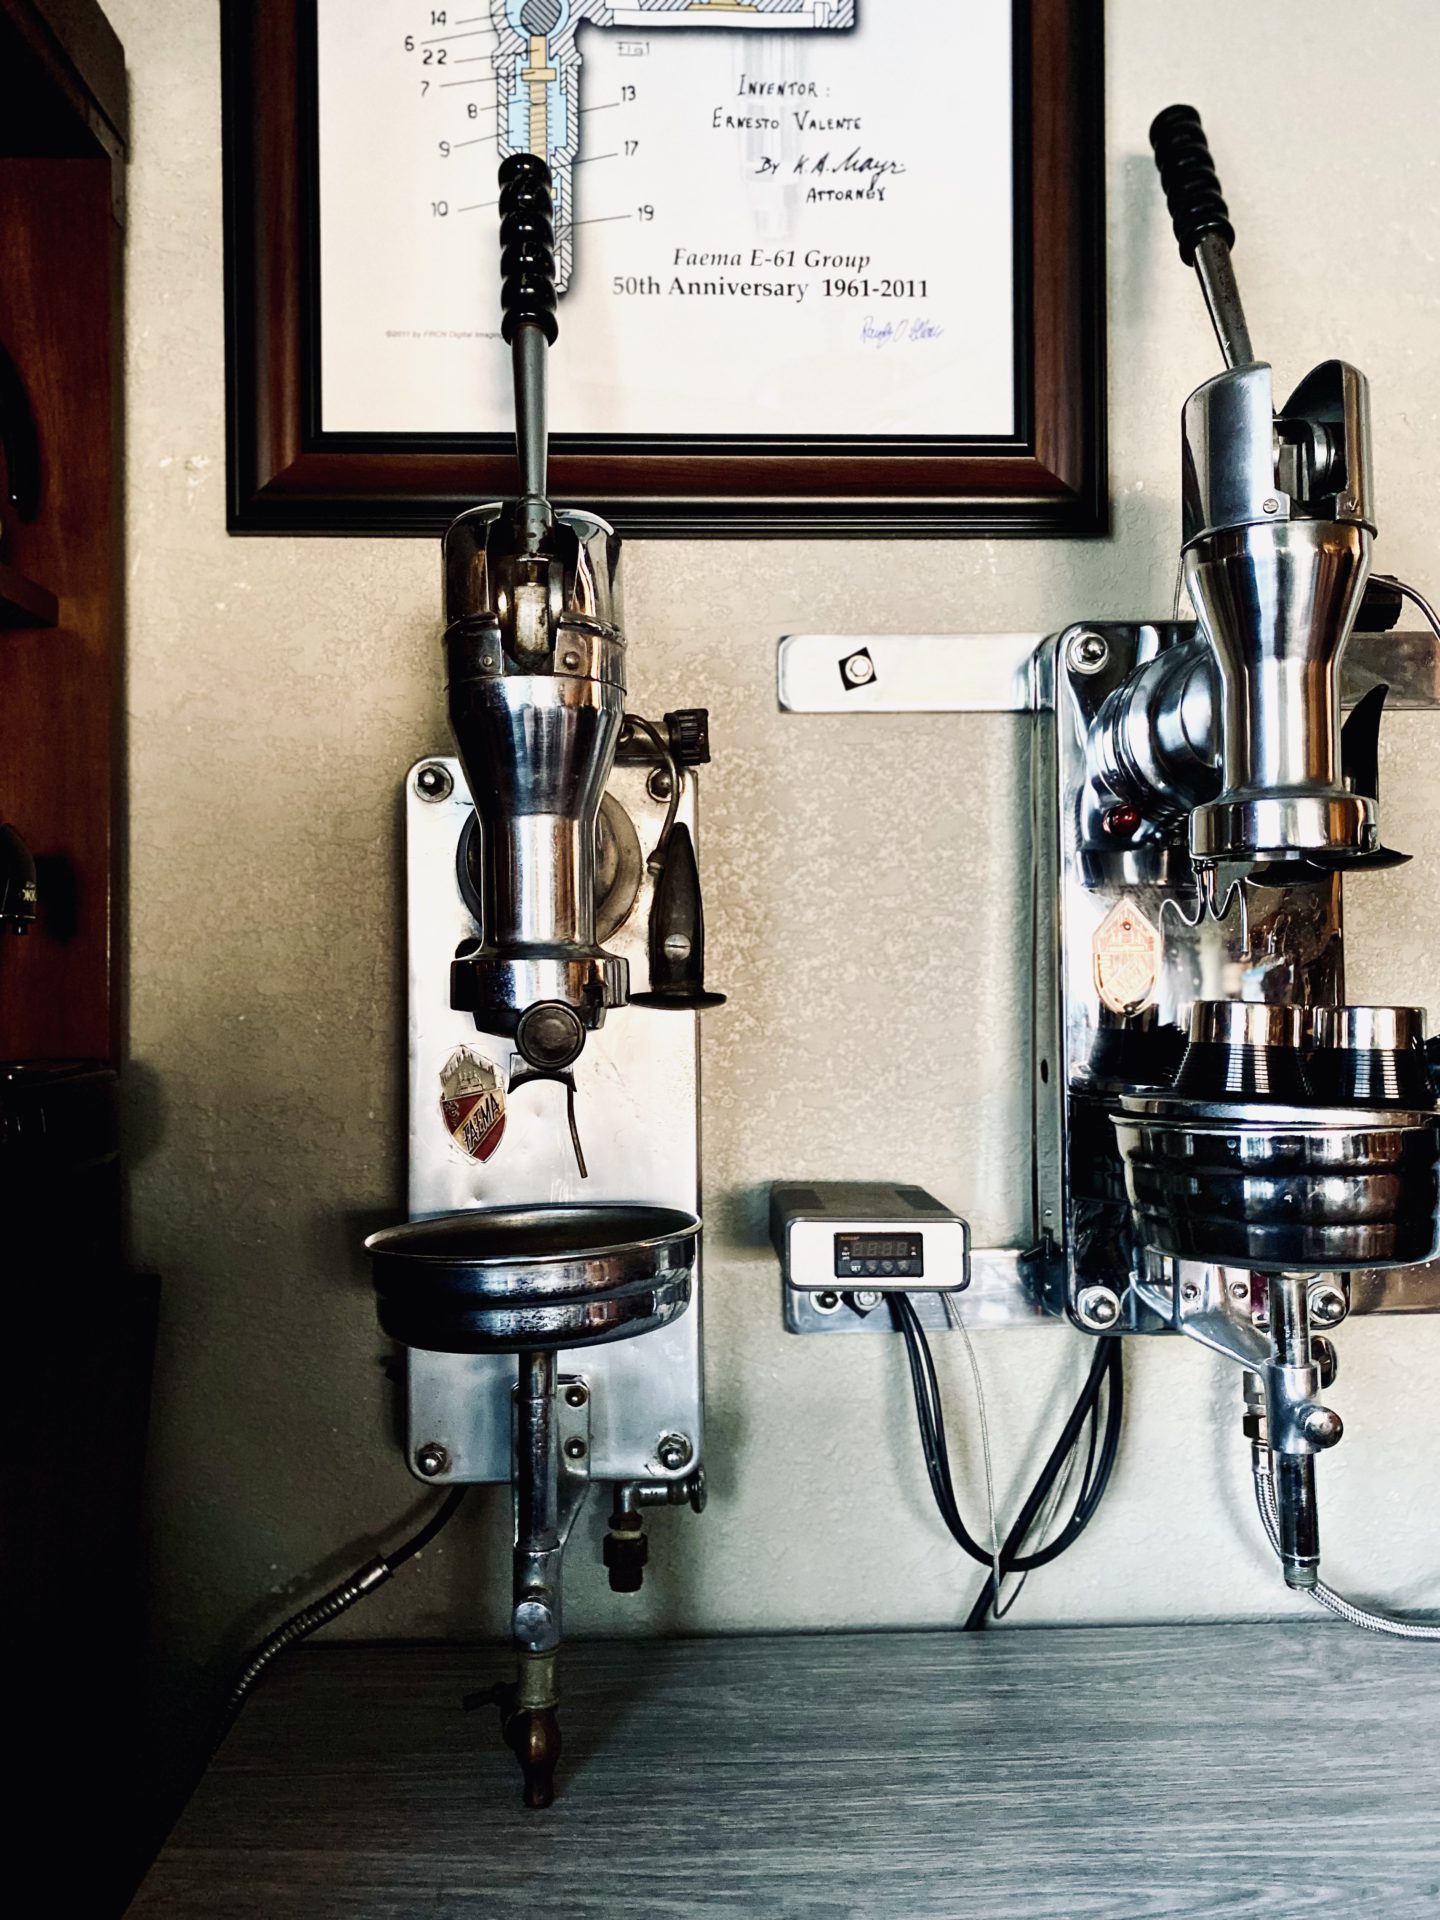 Old Fashioned Espresso Machine With Two Cups Of Coffee by Stocksy  Contributor Aleksandar Novoselski - Stocksy